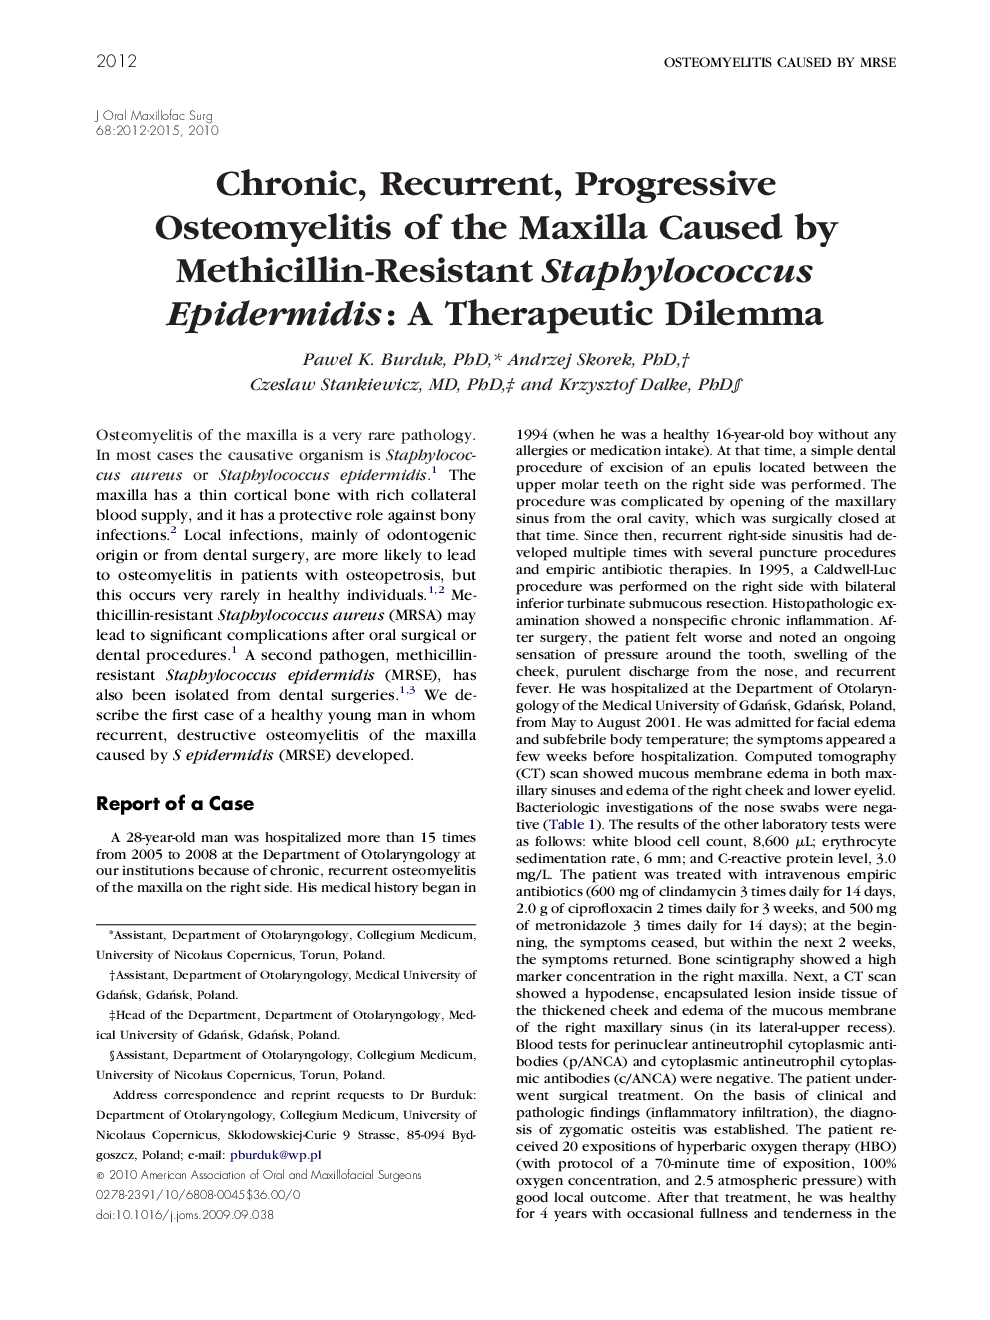 Chronic, Recurrent, Progressive Osteomyelitis of the Maxilla Caused by Methicillin-Resistant Staphylococcus Epidermidis: A Therapeutic Dilemma